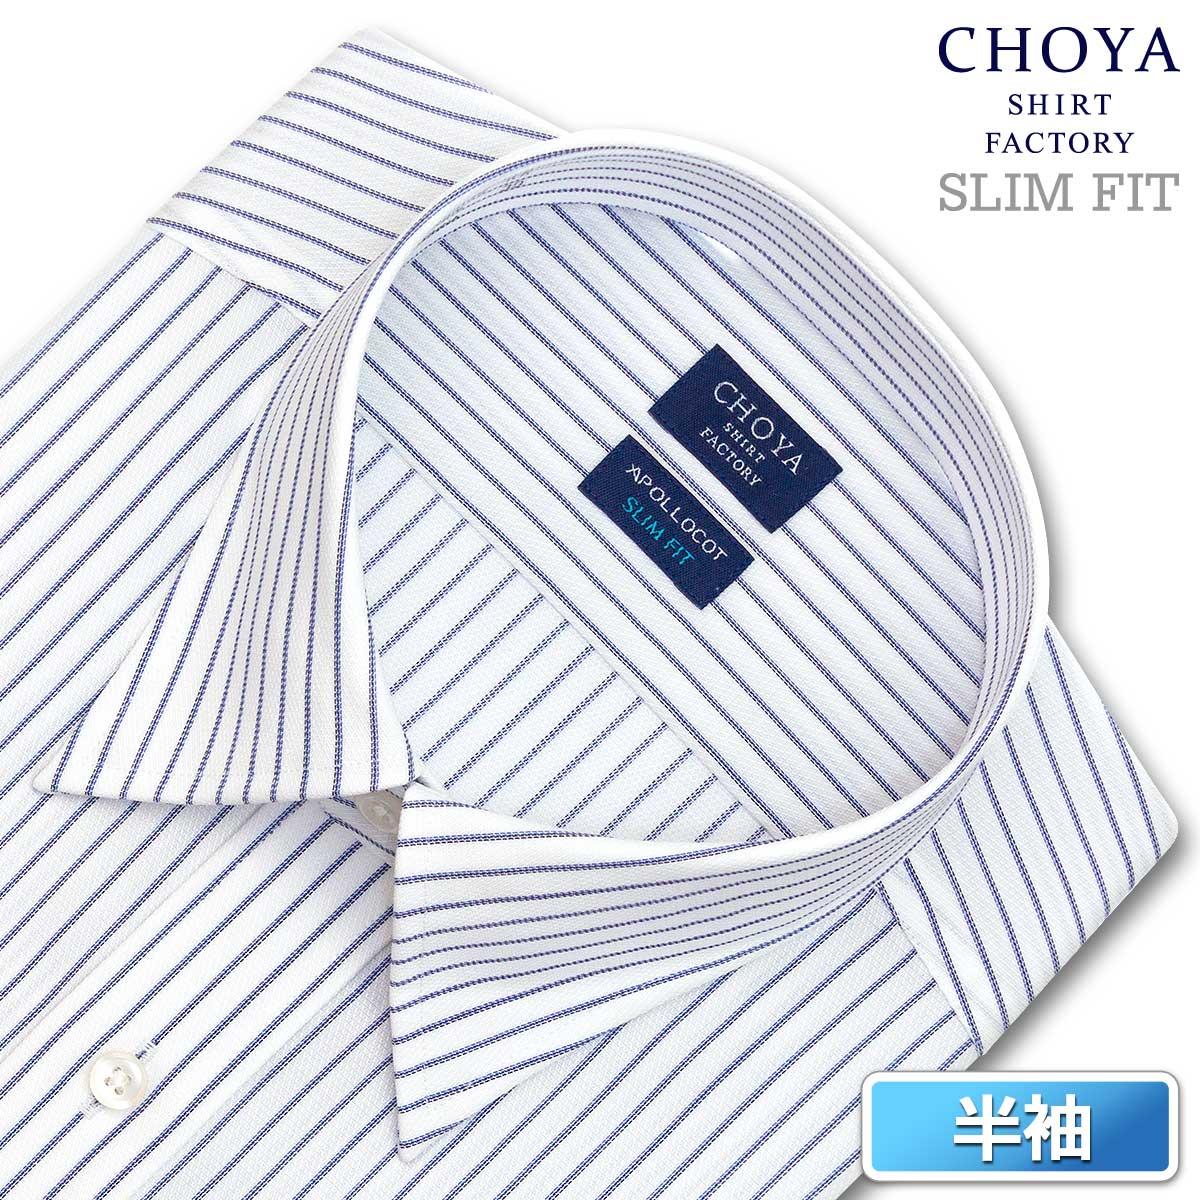 Yシャツ スリムフィット 日清紡アポロコット 半袖 ワイシャツ メンズ 夏 形態安定 ブルーストライプ スナップダウンシャツ 綿100% ブルー チョーヤシャツ CHOYA SHIRT FACTORY(cfn443-450)